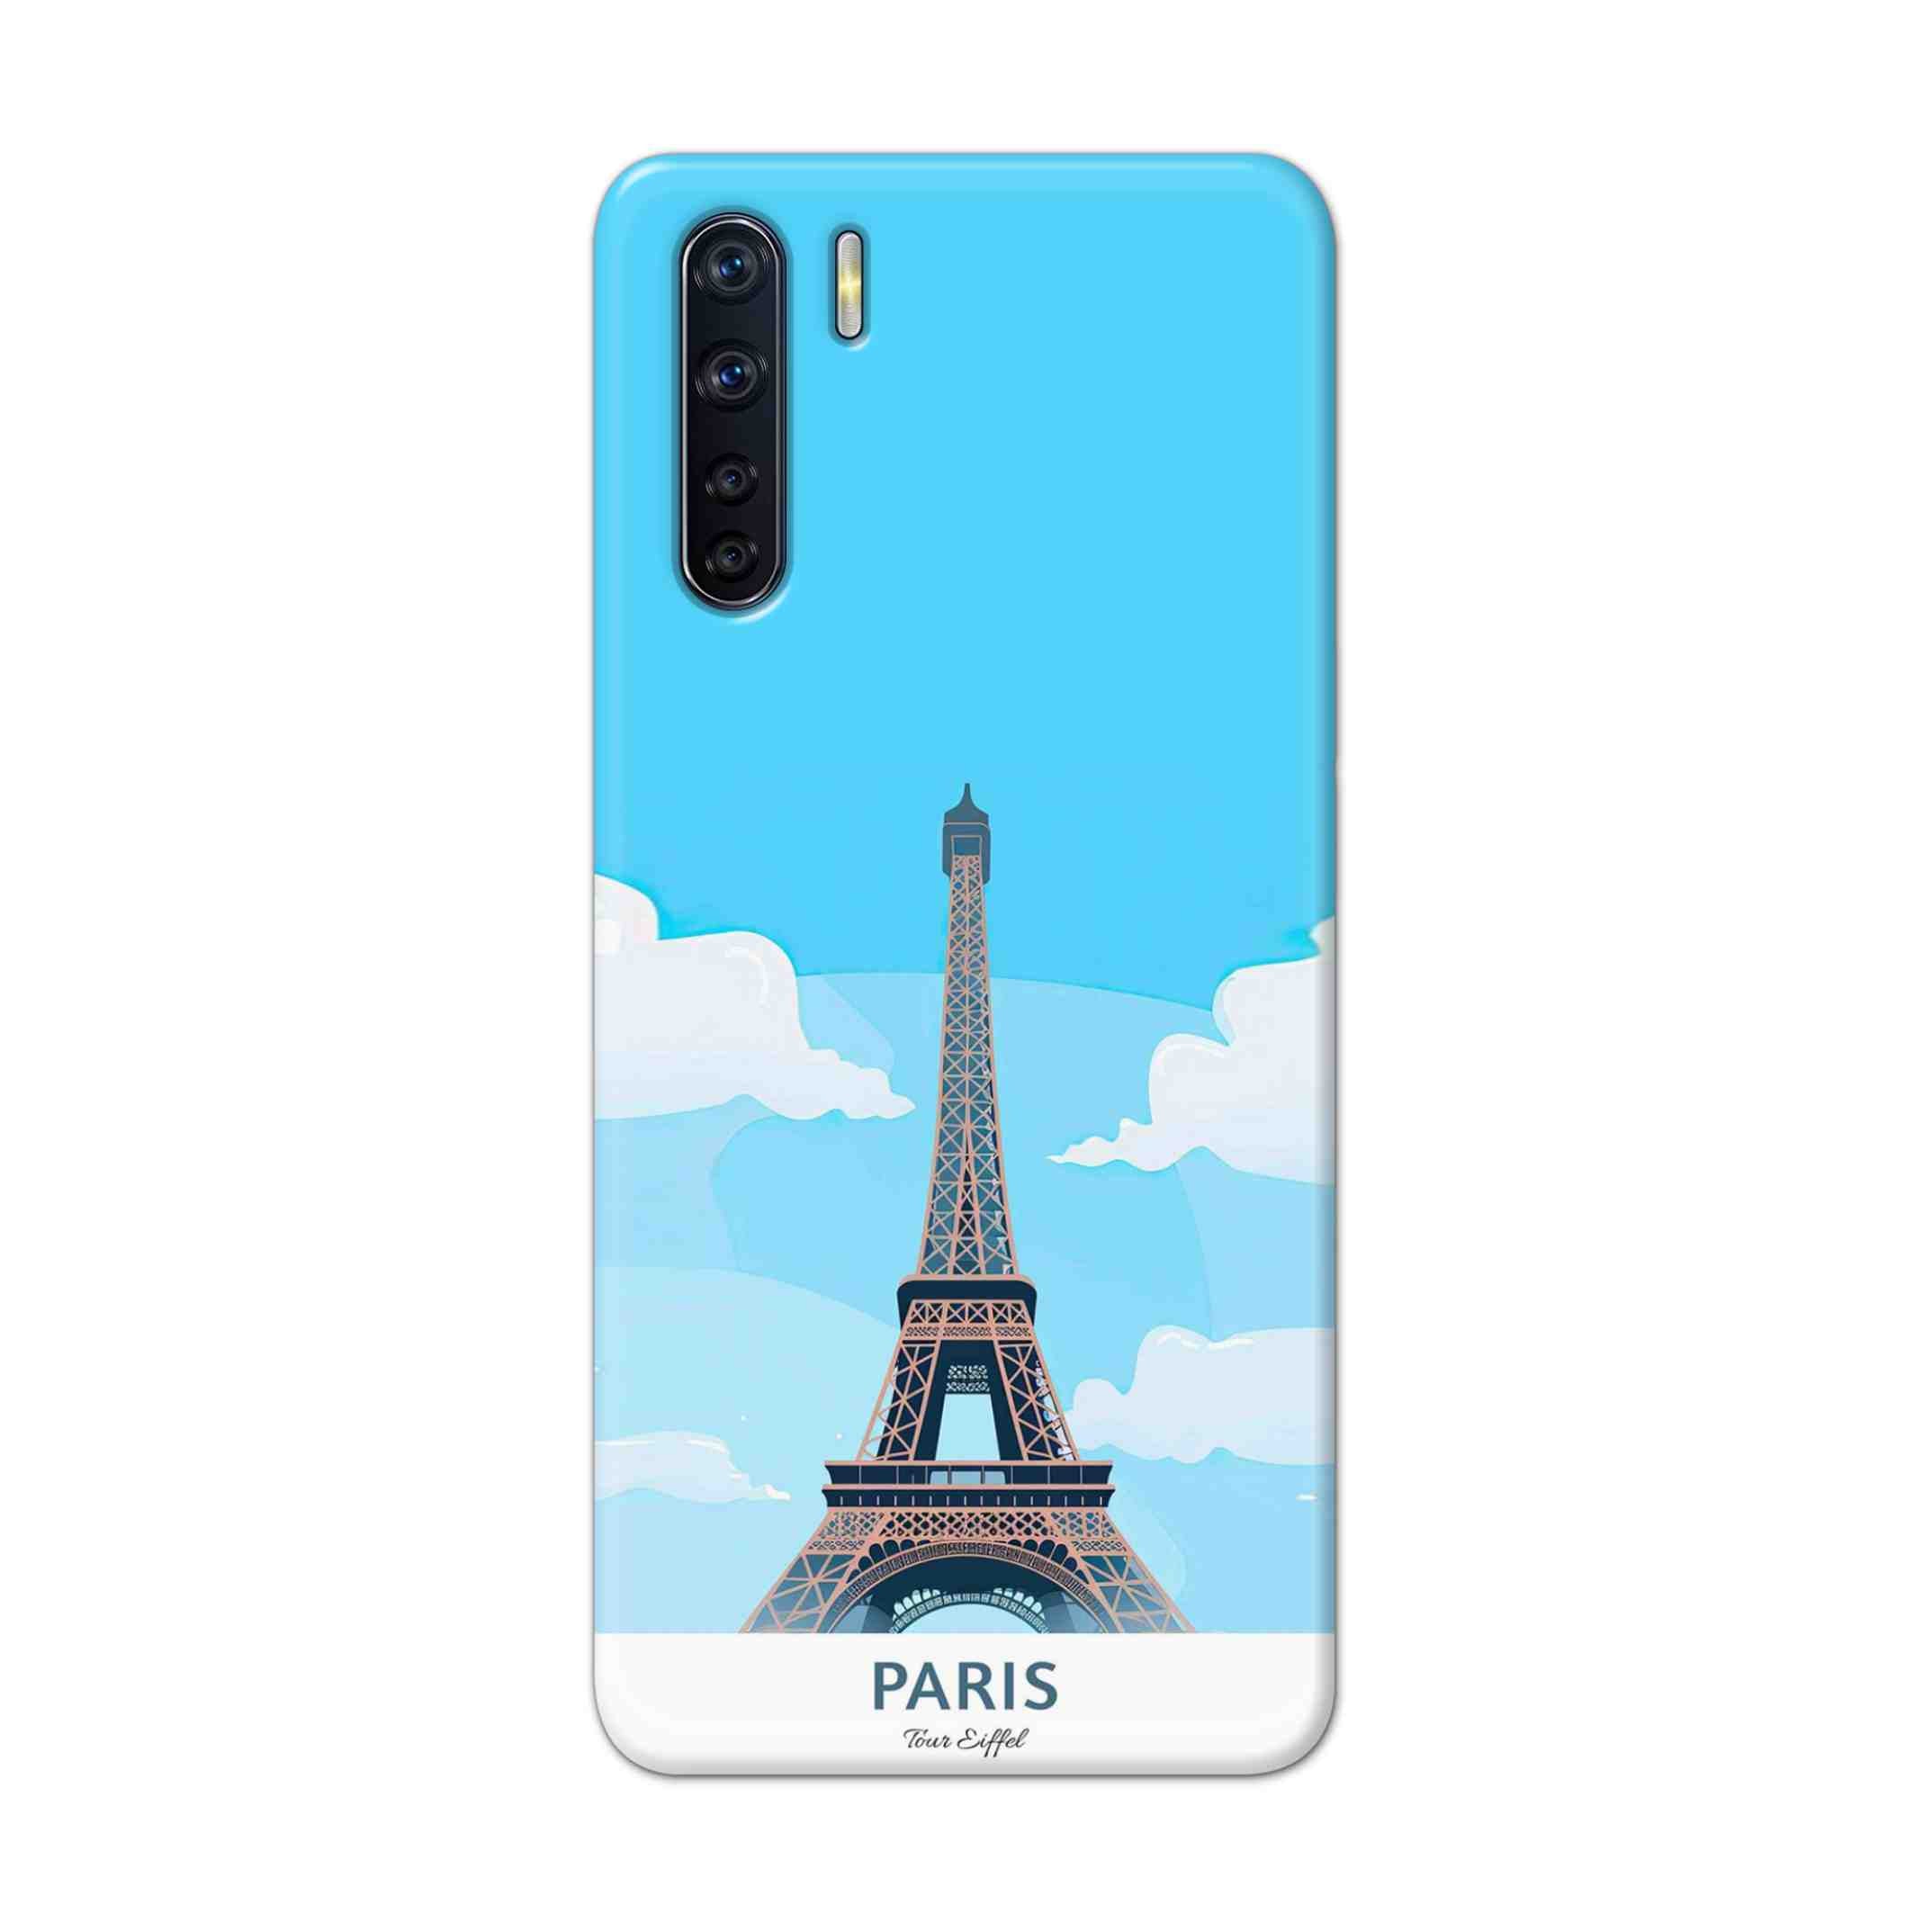 Buy Paris Hard Back Mobile Phone Case Cover For OPPO F15 Online